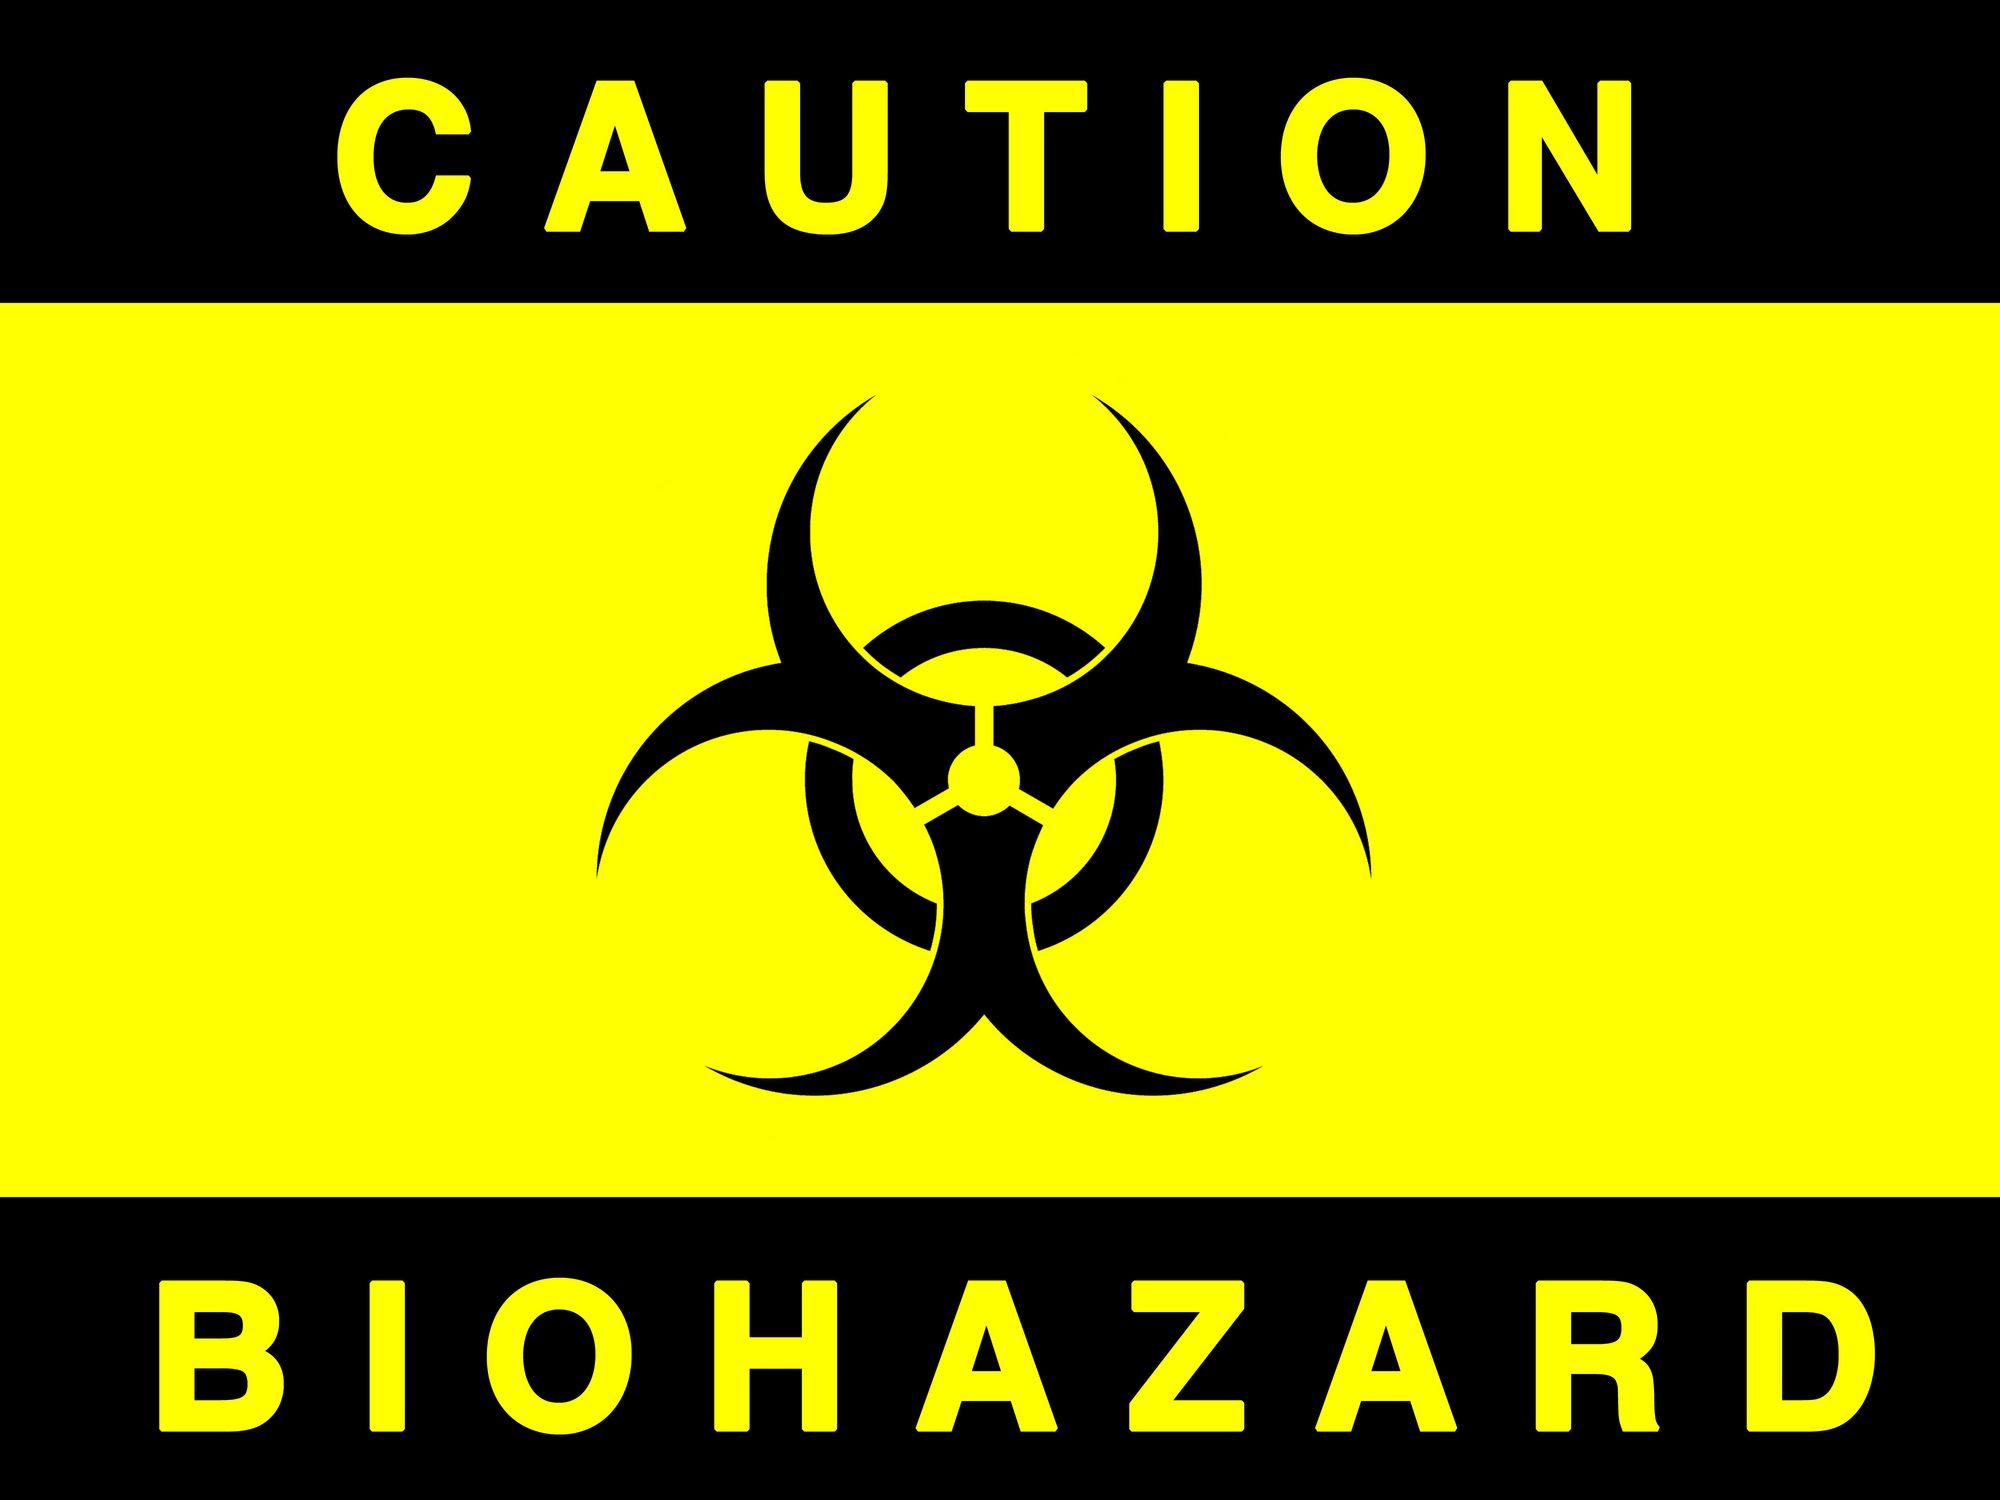 Biohazard: It&about people not resumés